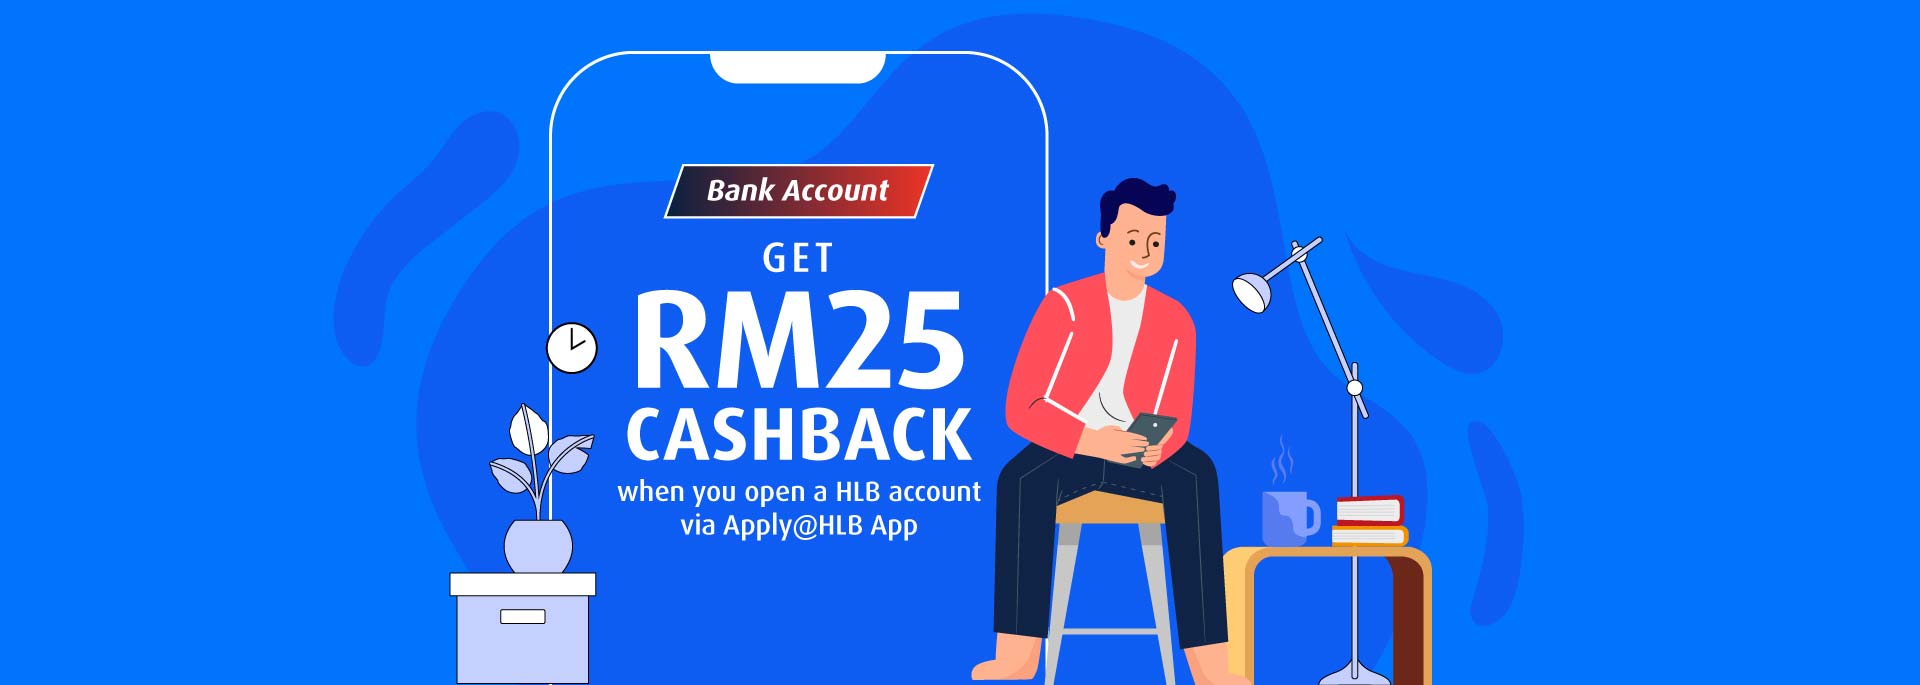 Get RM25 Cashback when you open a HLB account via Apply@HLB App